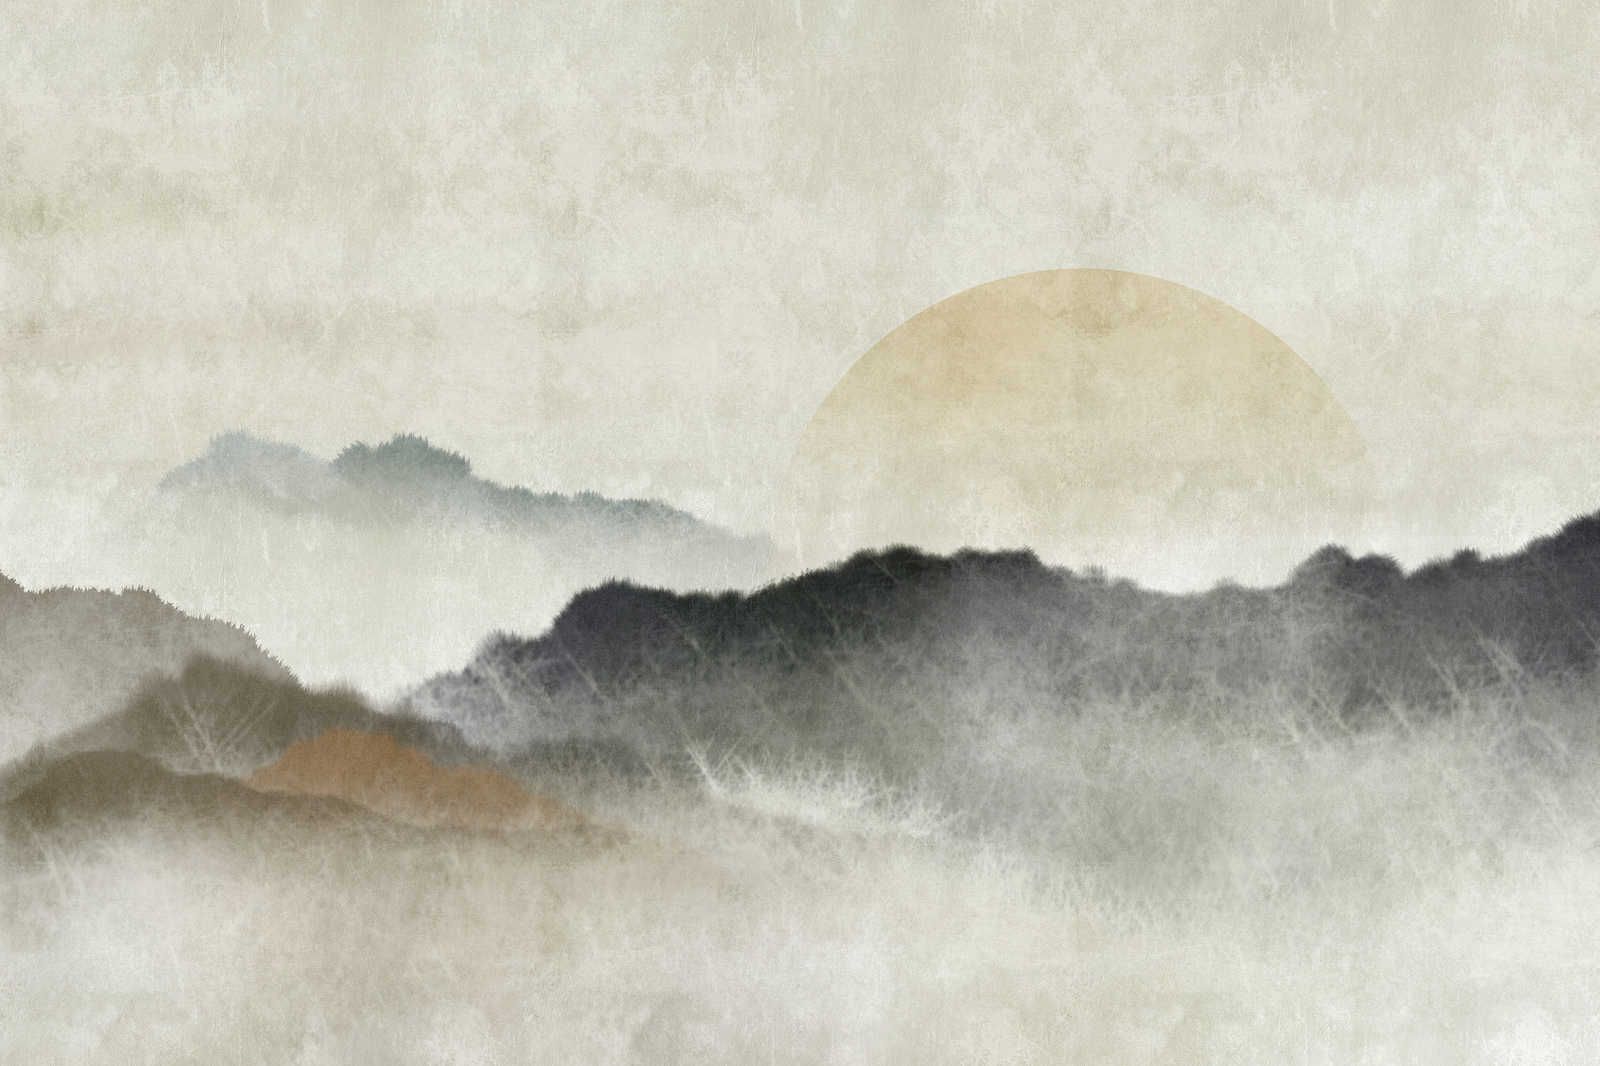             Akaishi 1 - Canvas schilderij Asian Print Bergketen in dageraad - 0.90 m x 0.60 m
        